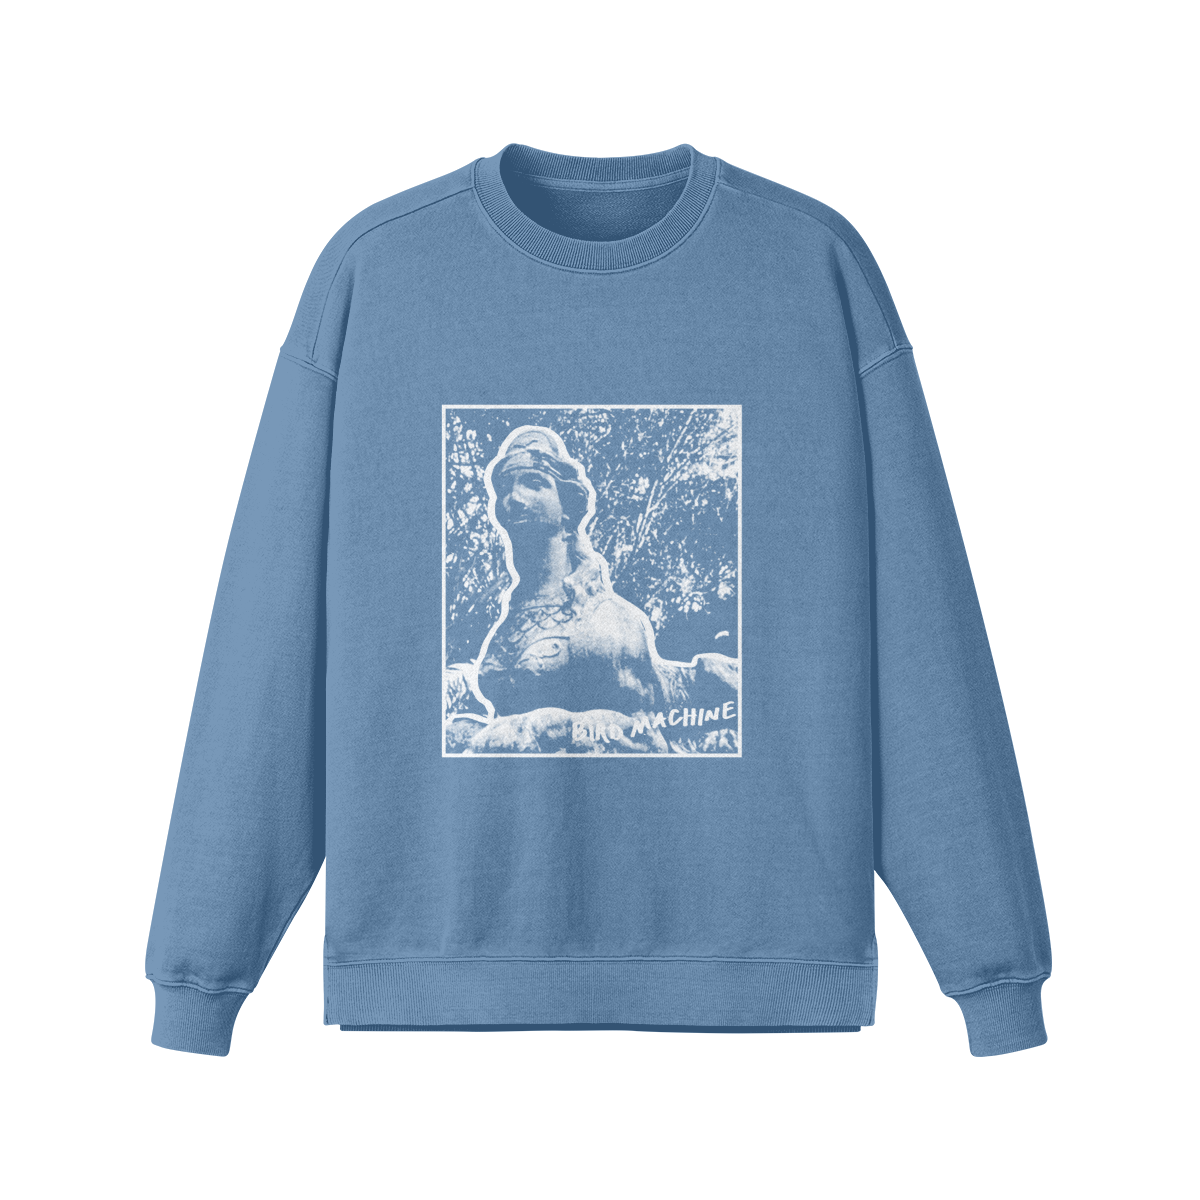 Bird Machine Merch - Unisex Oversized Faded Sweatshirt (Slate Blue)